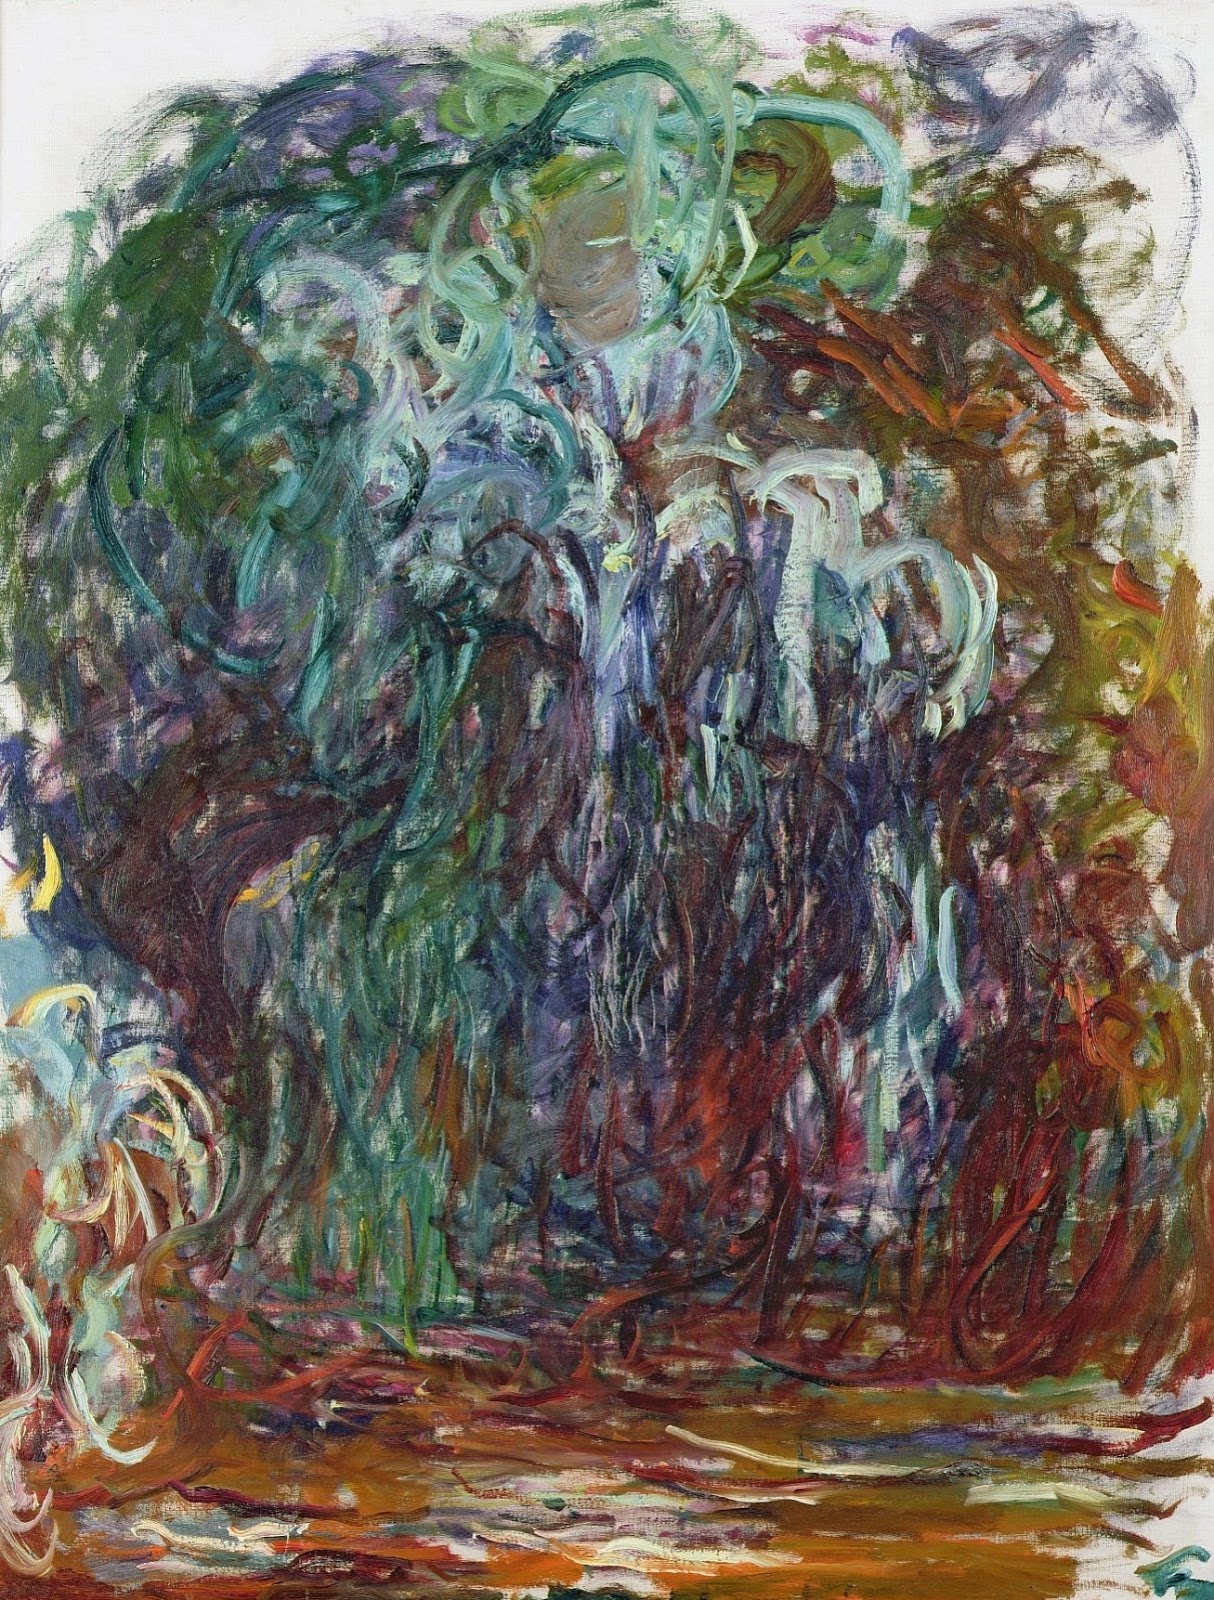 Claude+Monet-1840-1926 (678).jpg